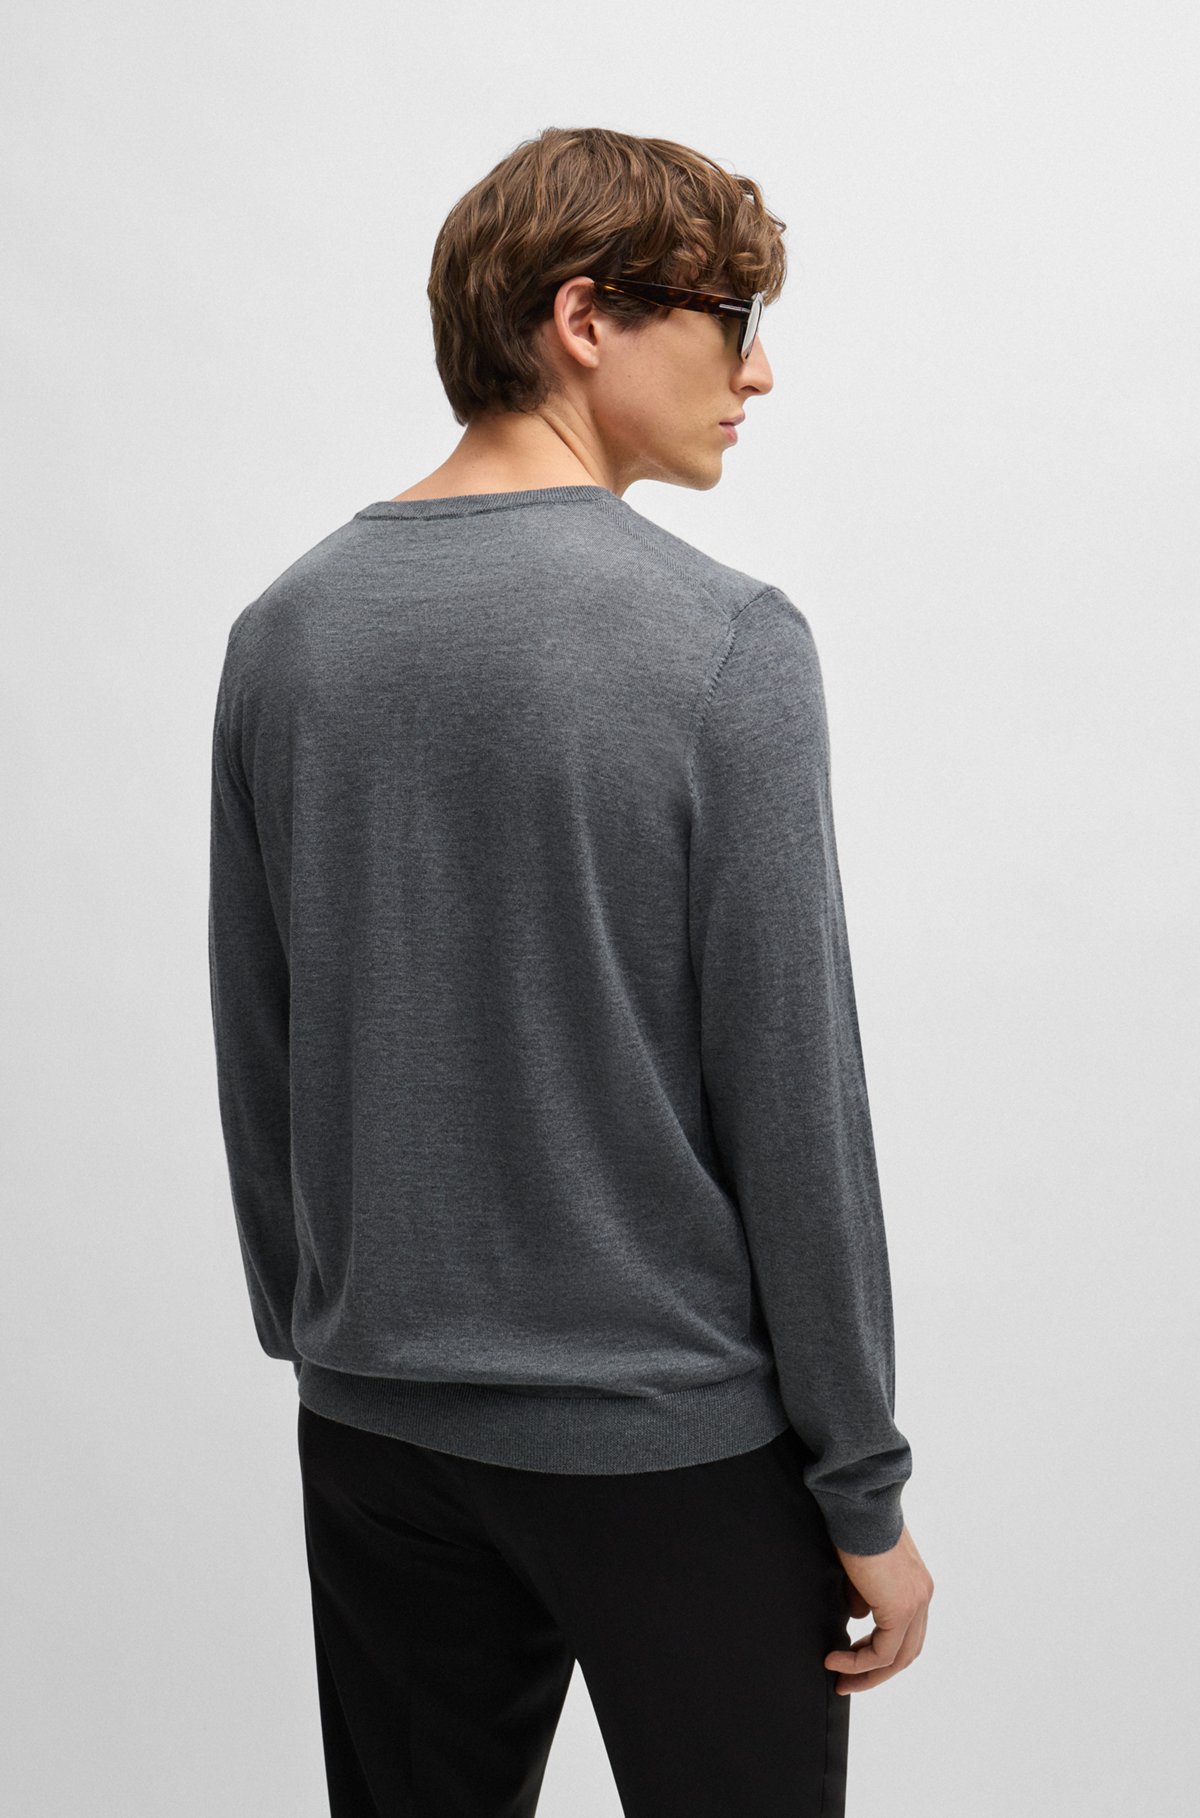 V-neck slim-fit sweater in virgin wool, Grey